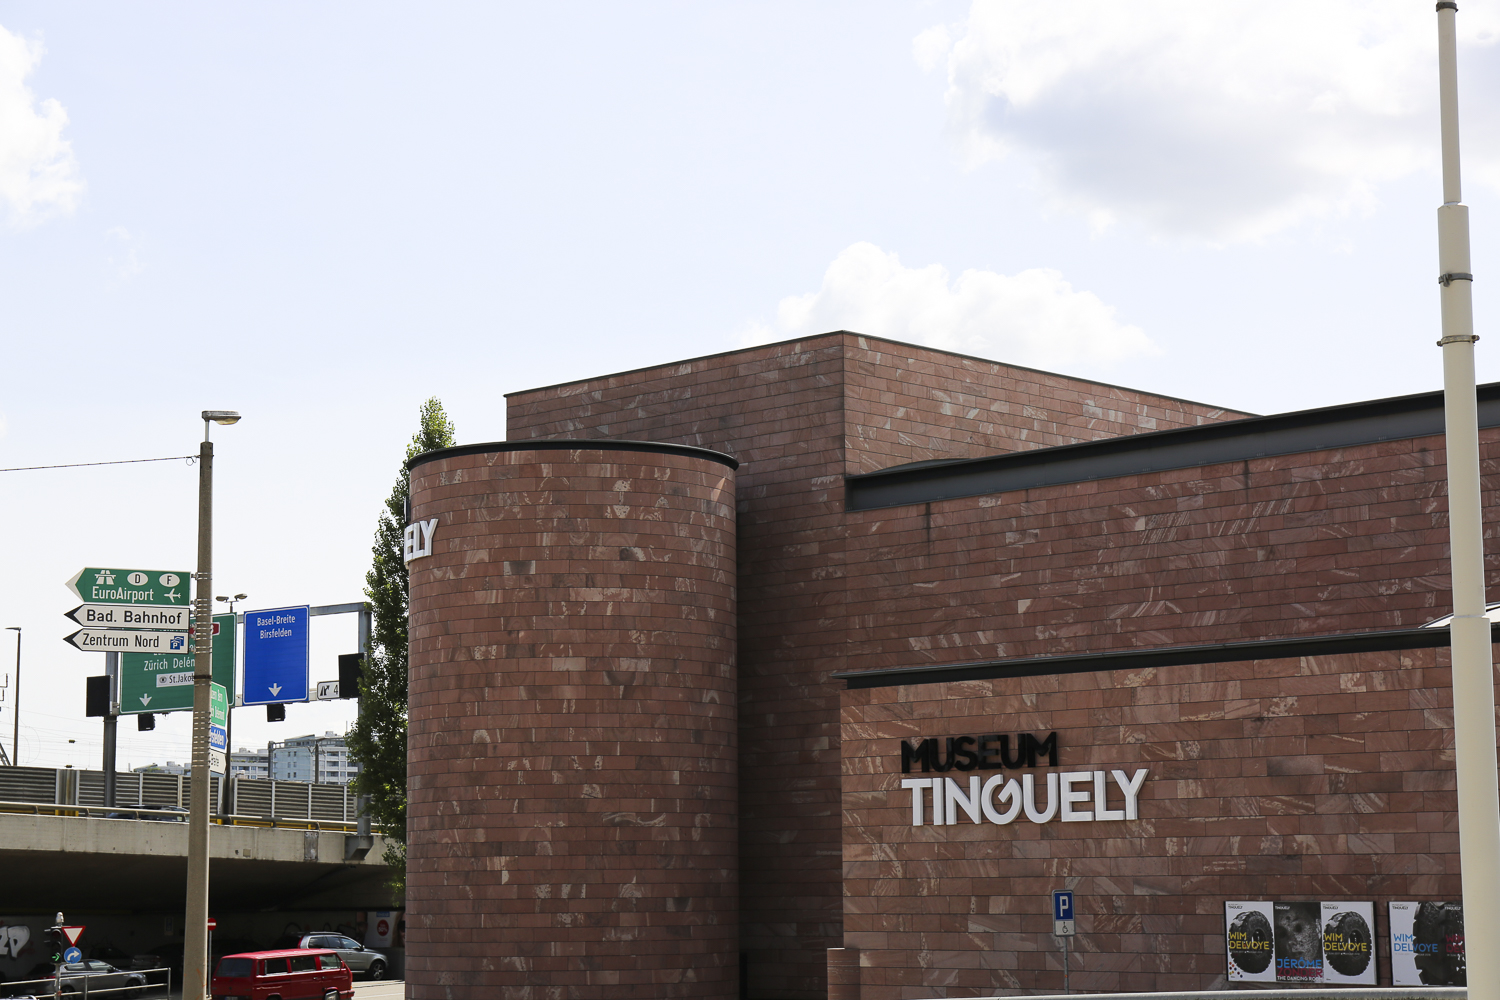 Museum Tinguely, Nicola Bramigk